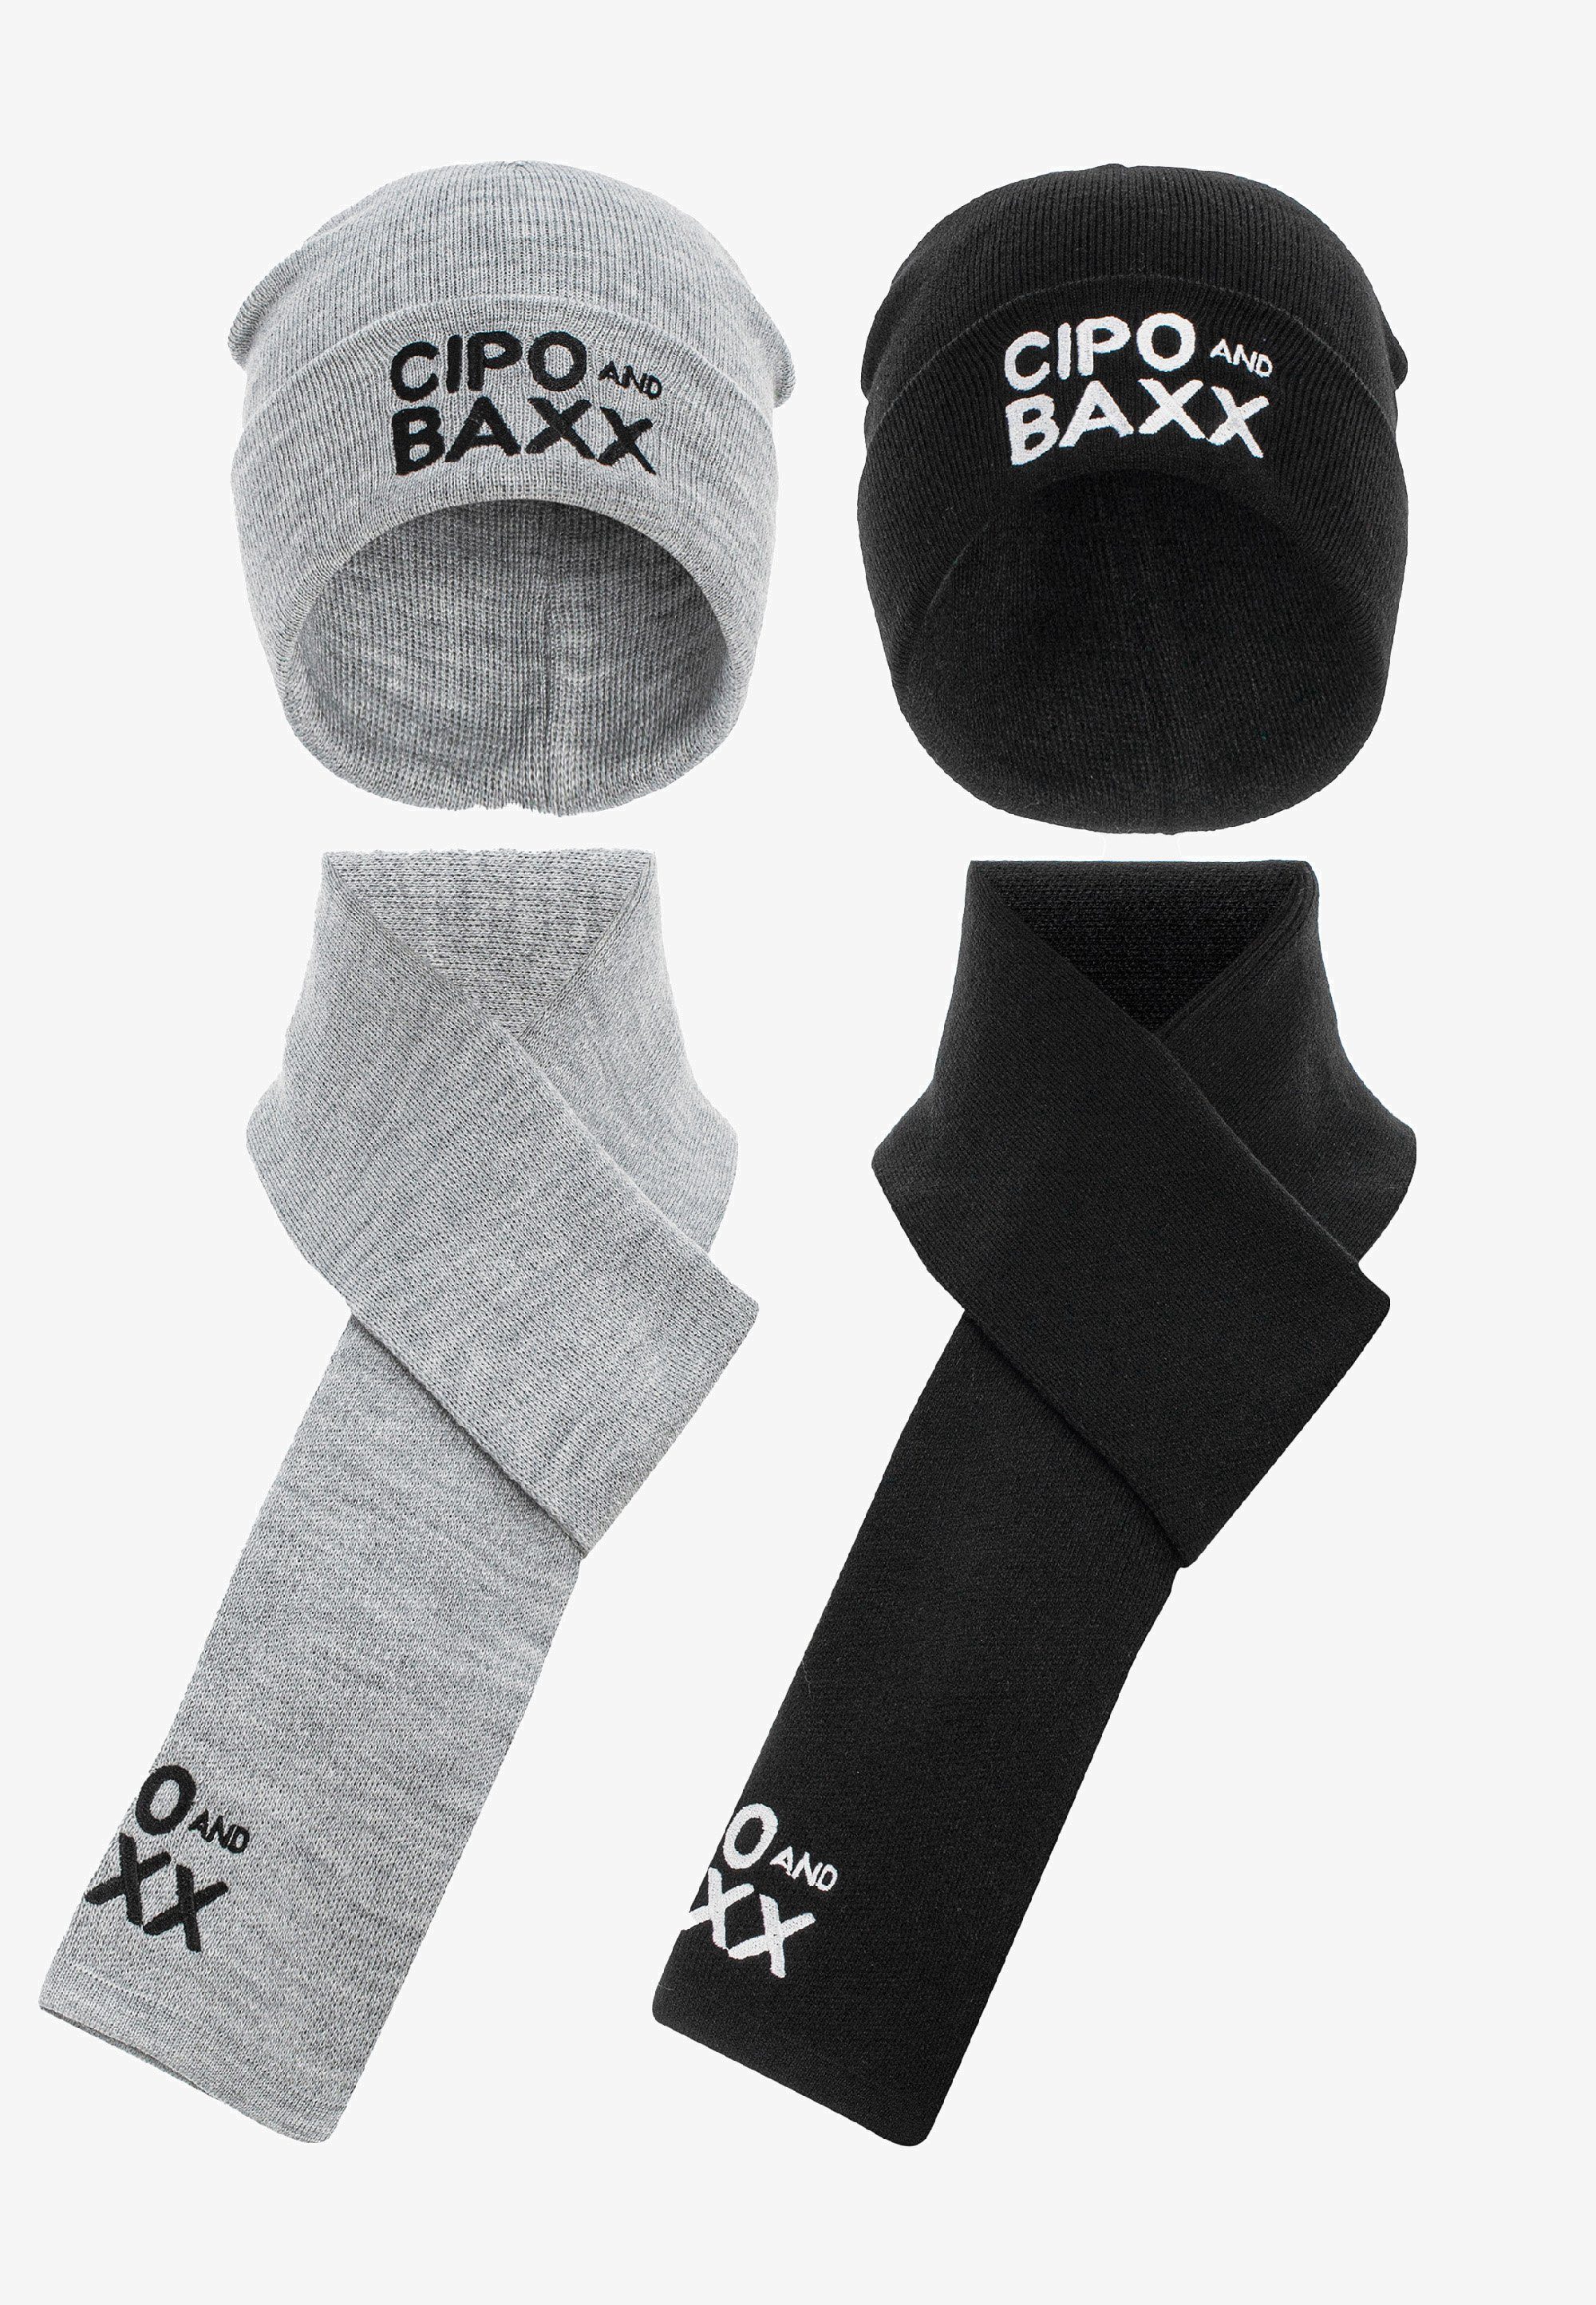 Cipo Strickmütze Baxx mit Markenschriftzug & bestickt